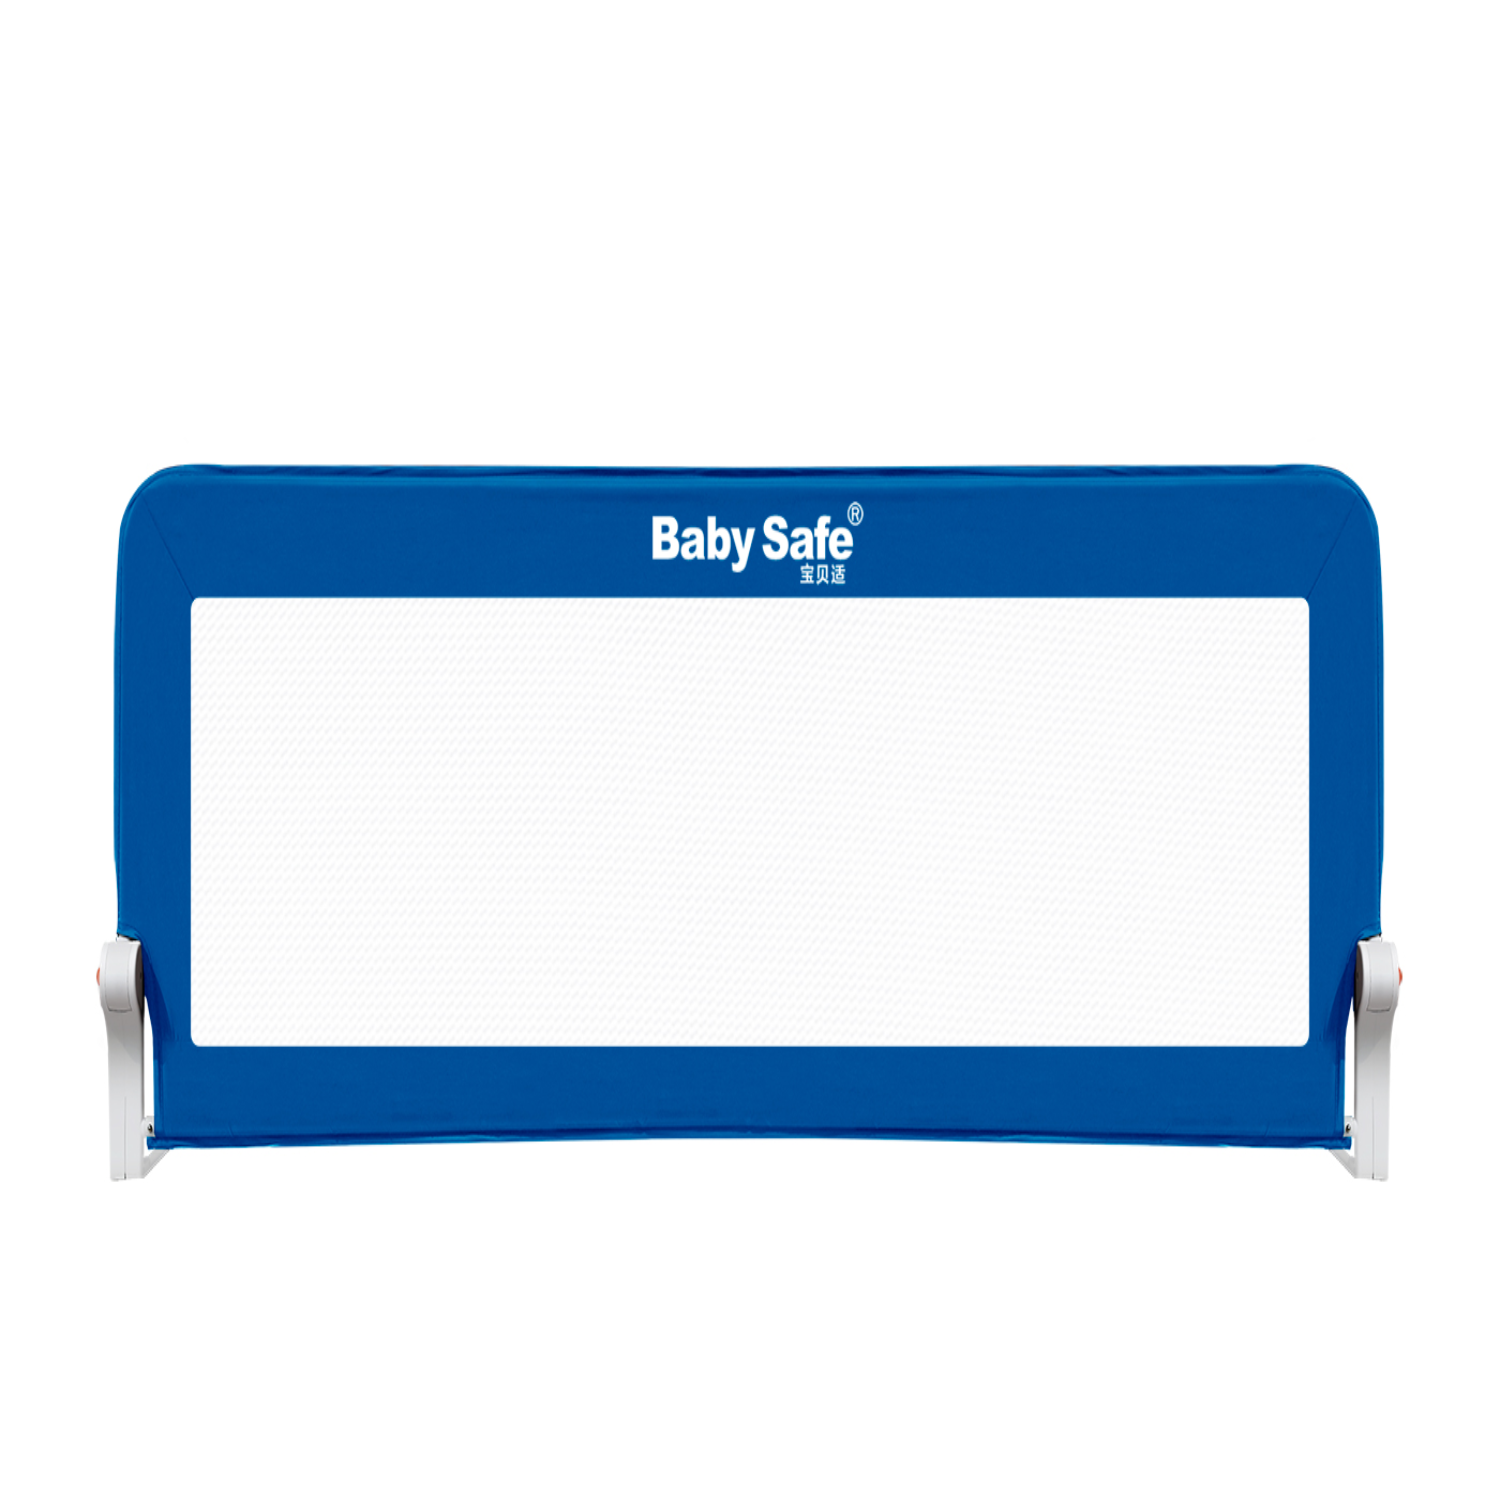 Барьер защитный для кровати Baby Safe 150х66 синий - фото 2